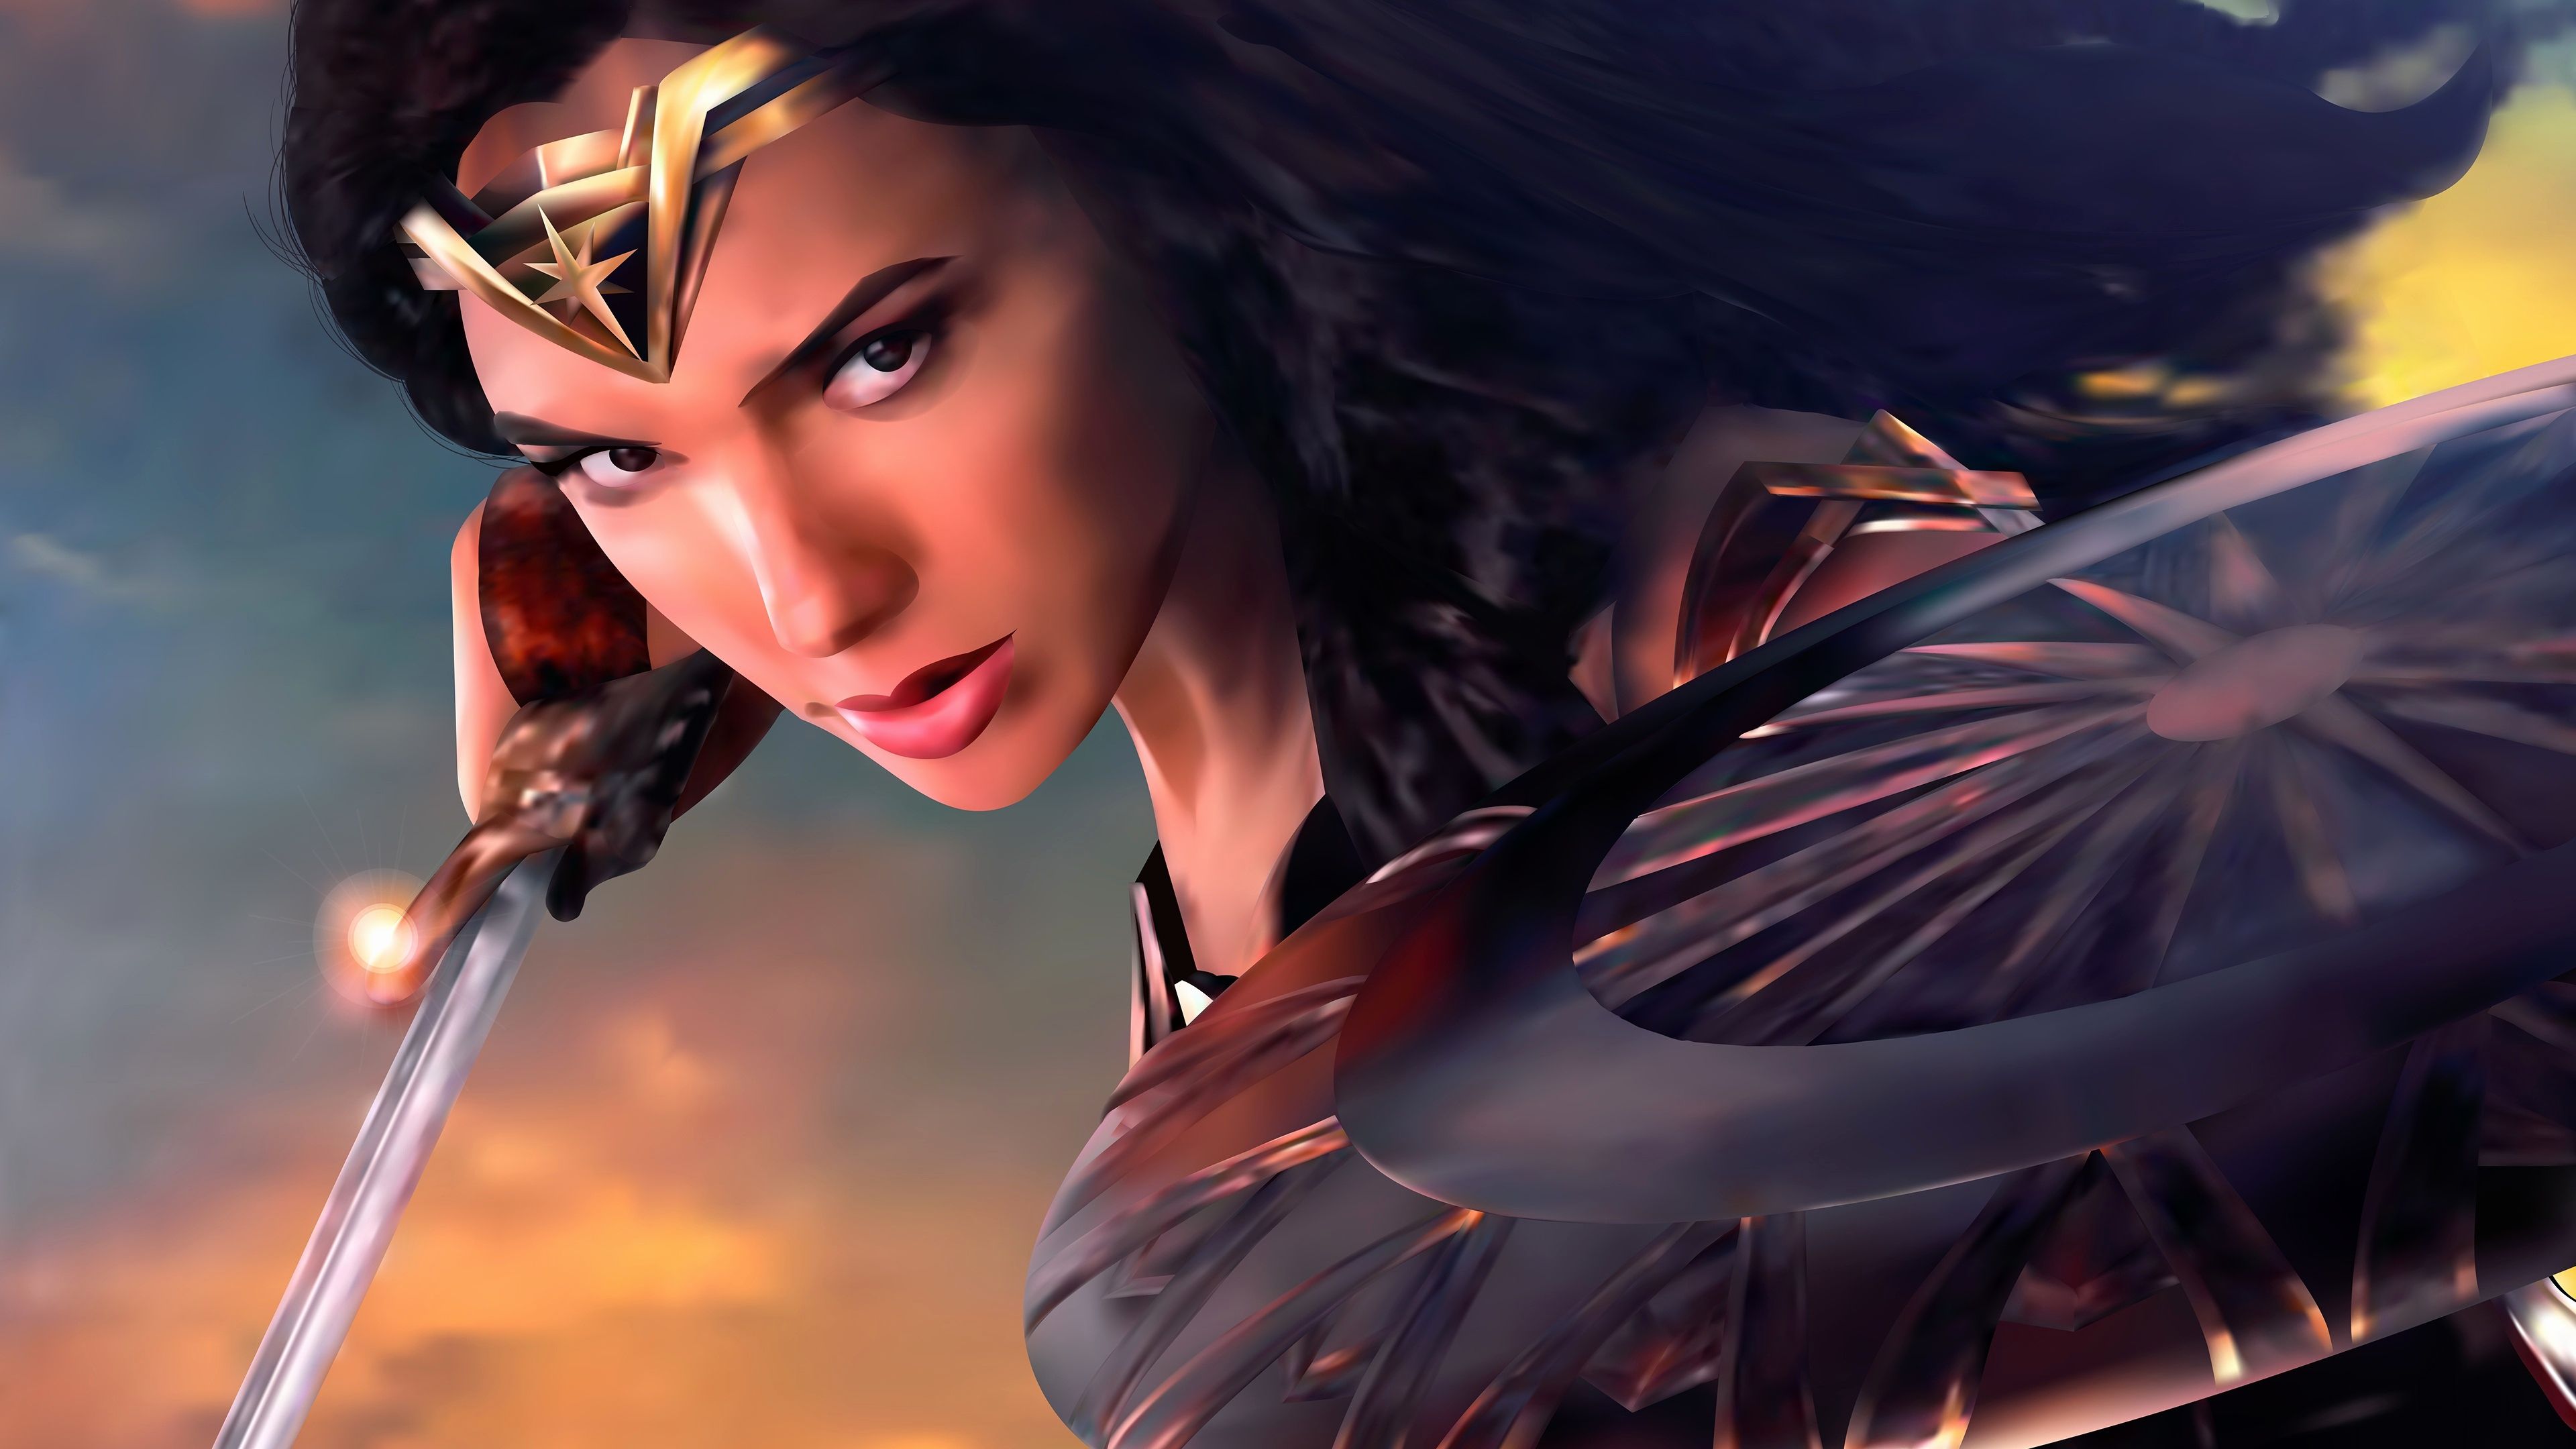 Wonder Woman 4k Wallpaper New Wonder Woman Wallpaper 4k Ultra HD This Year of The Hudson